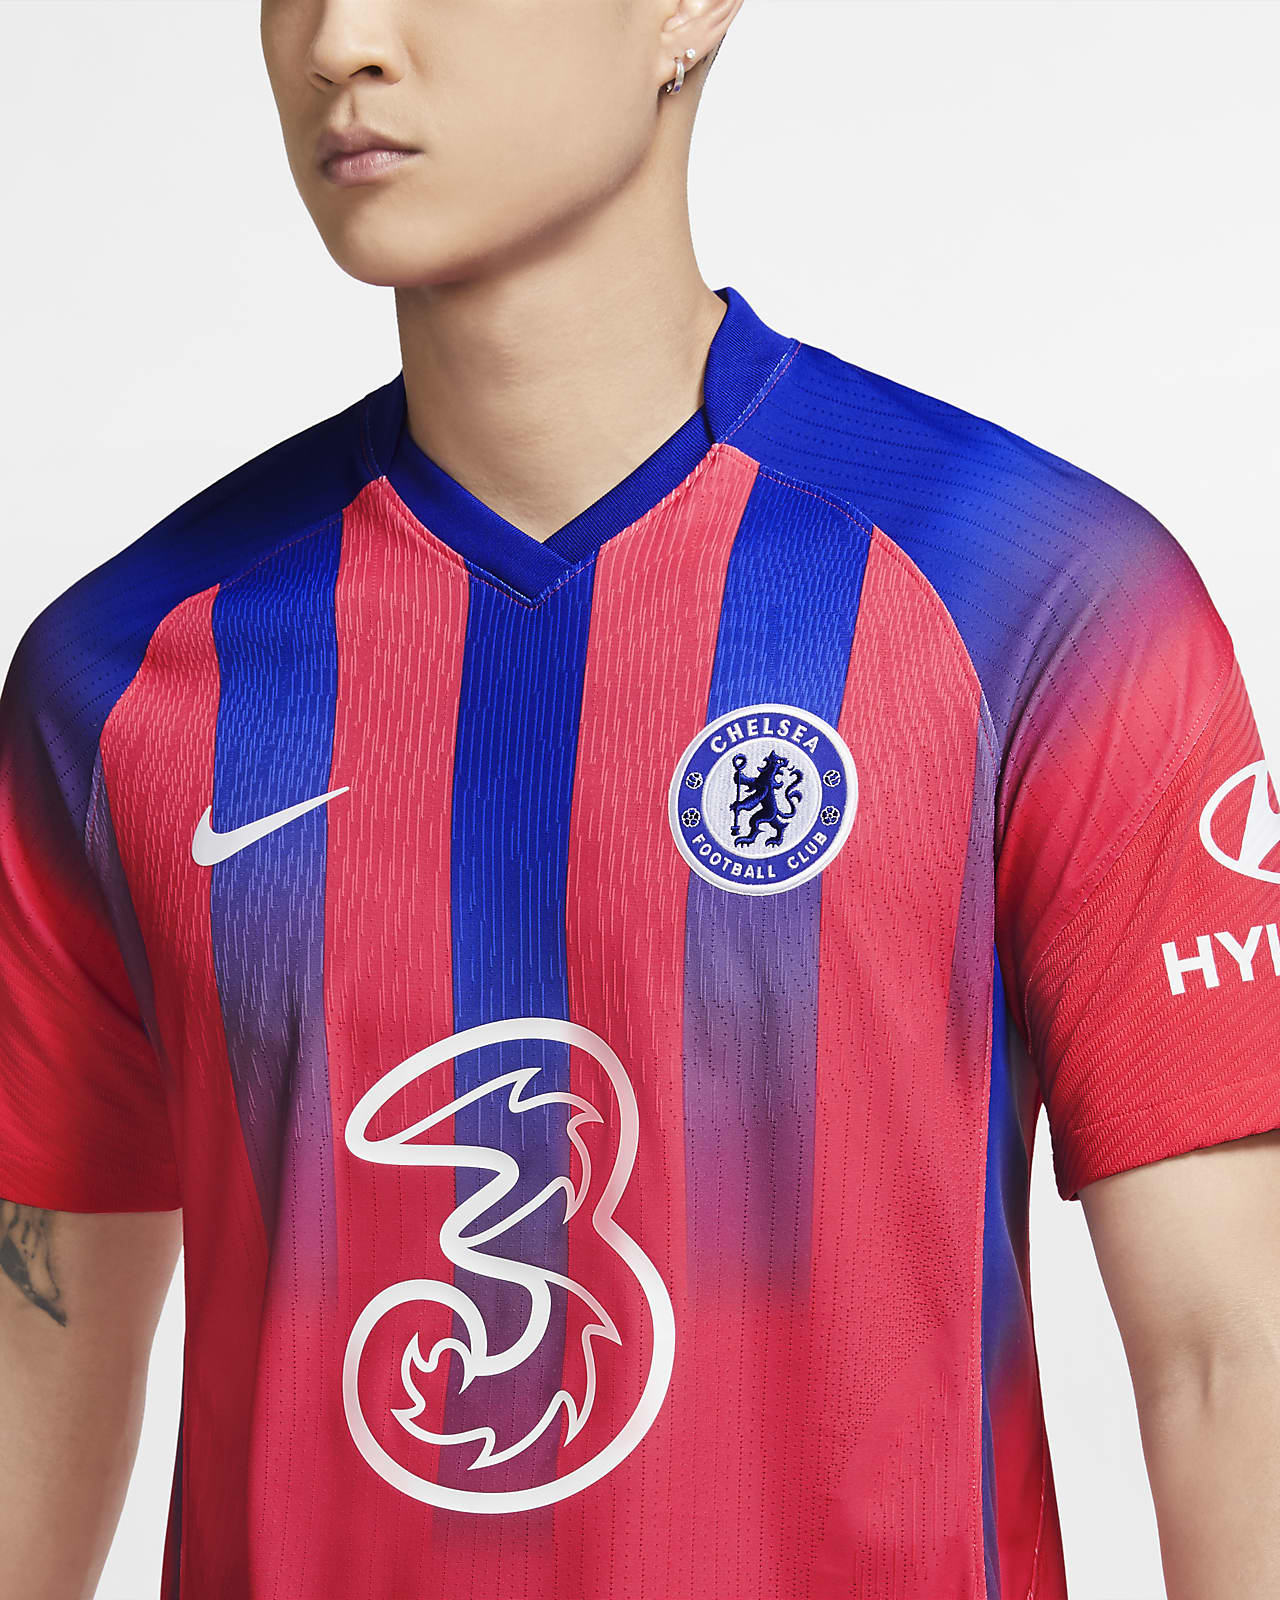 Chelsea F.C.2020/21 Vapor Match Third Men's Football Shirt. Nike MA